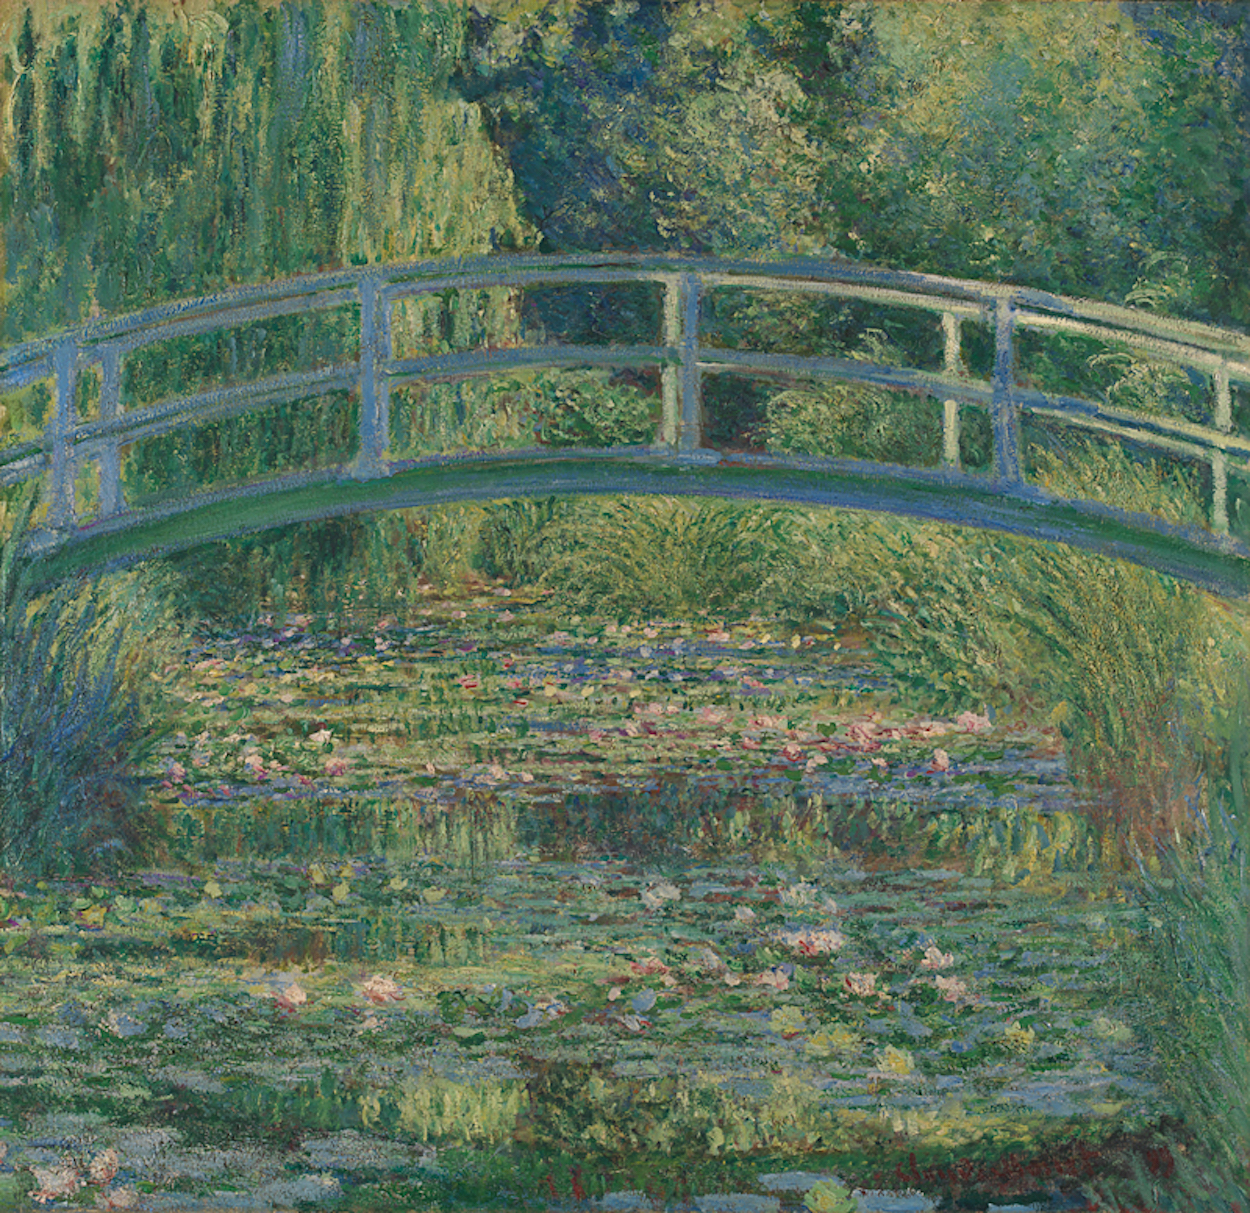 Ставок з лататтям by Claude Monet - 1899 - 88.3 х 93.1 см 